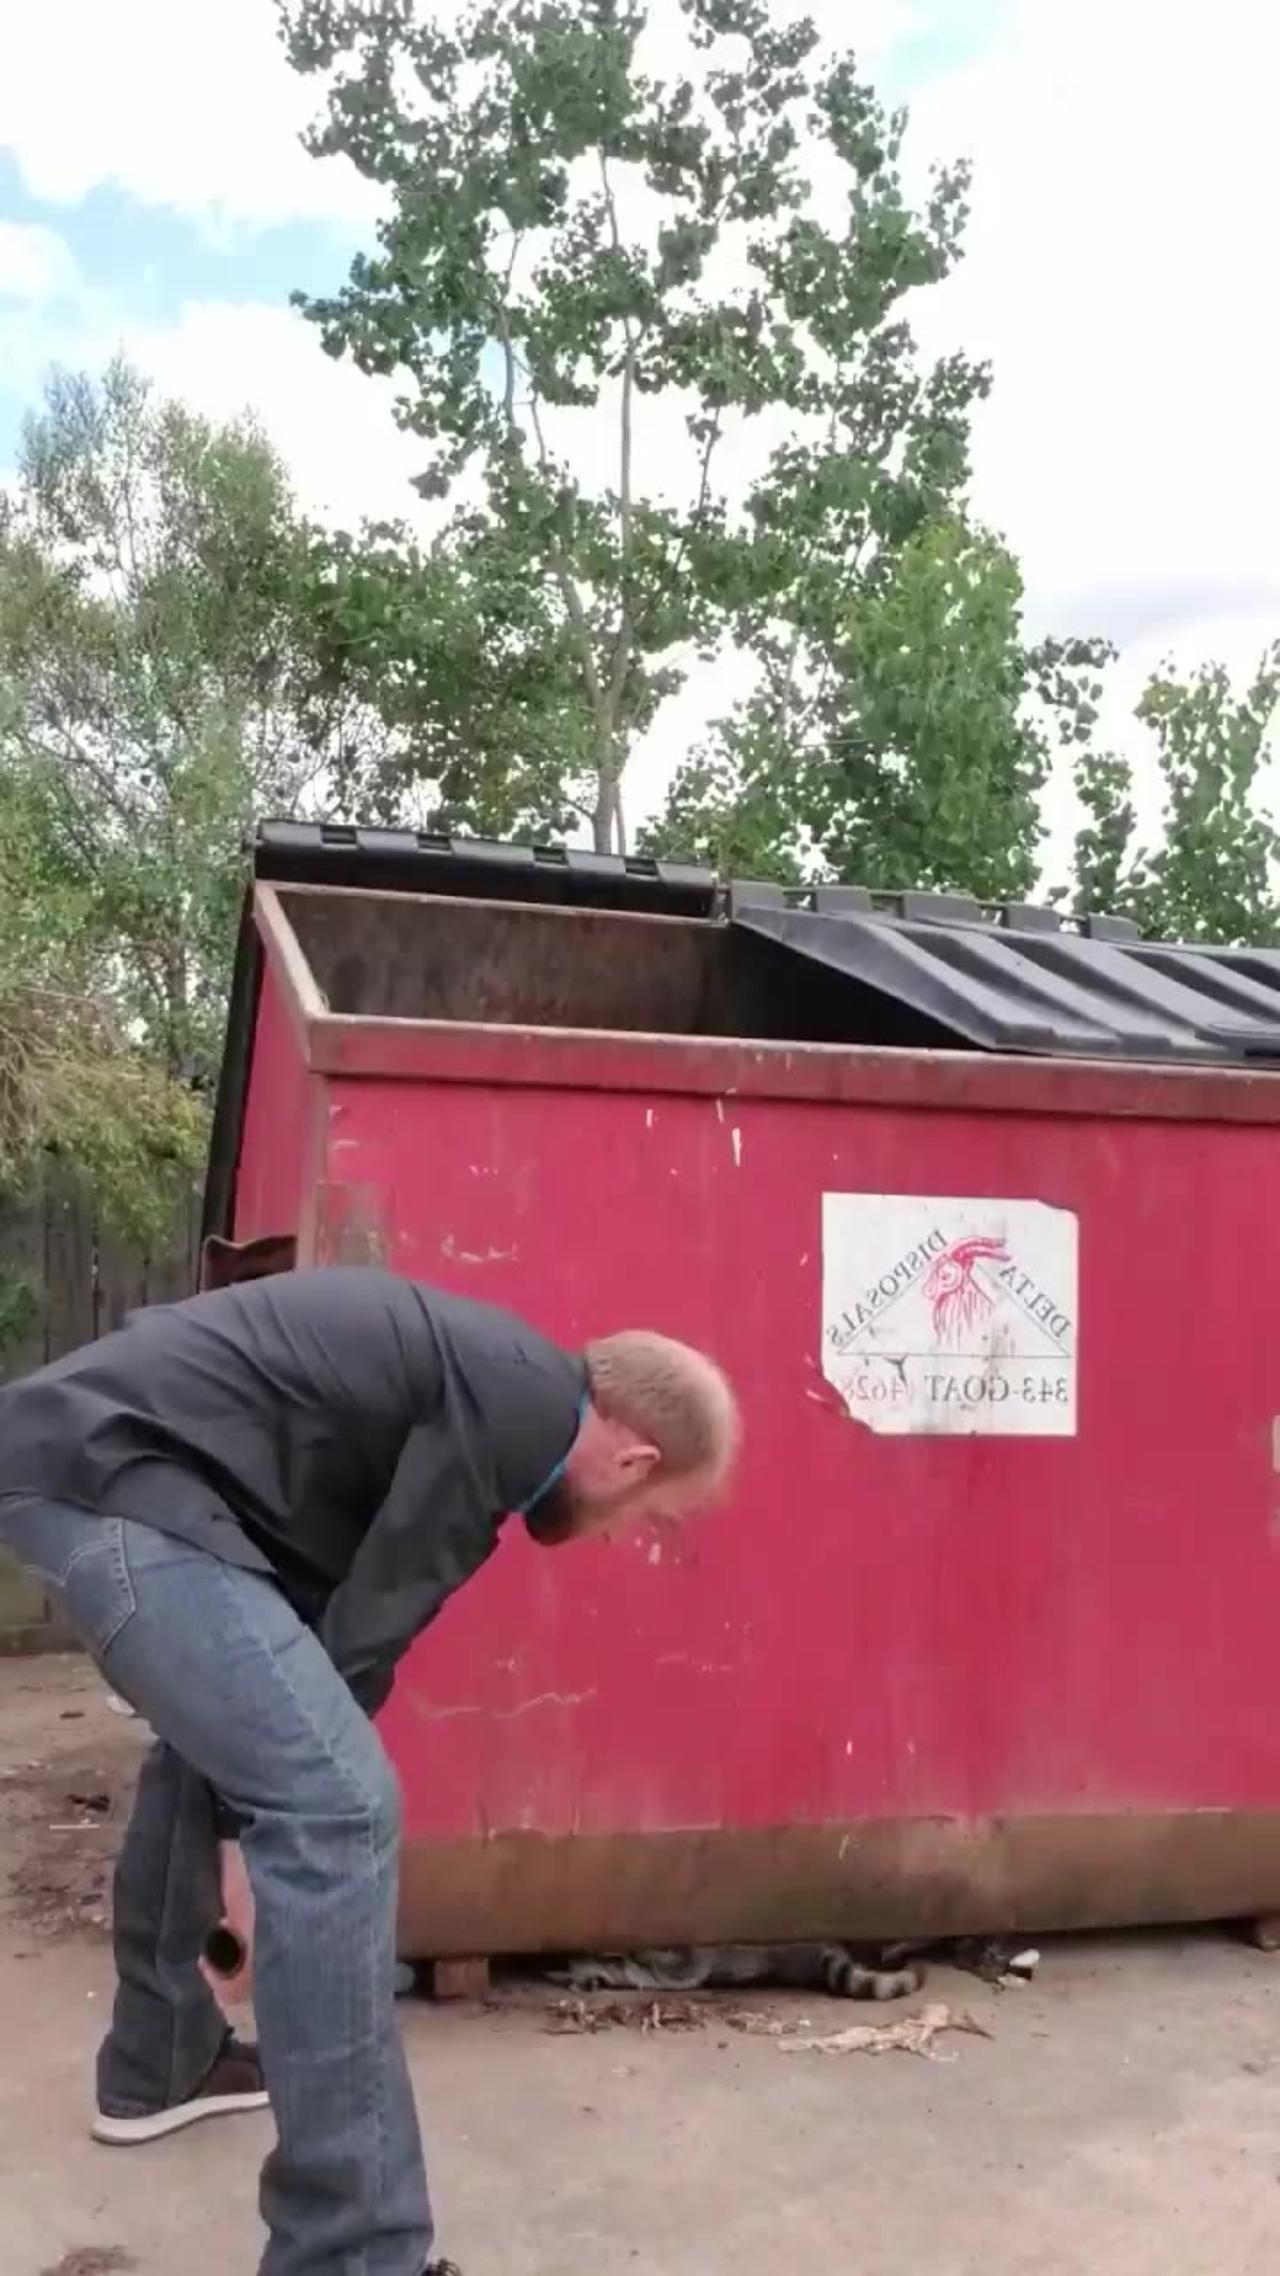 Man Helps Raccoon Stuck Under Dumpster